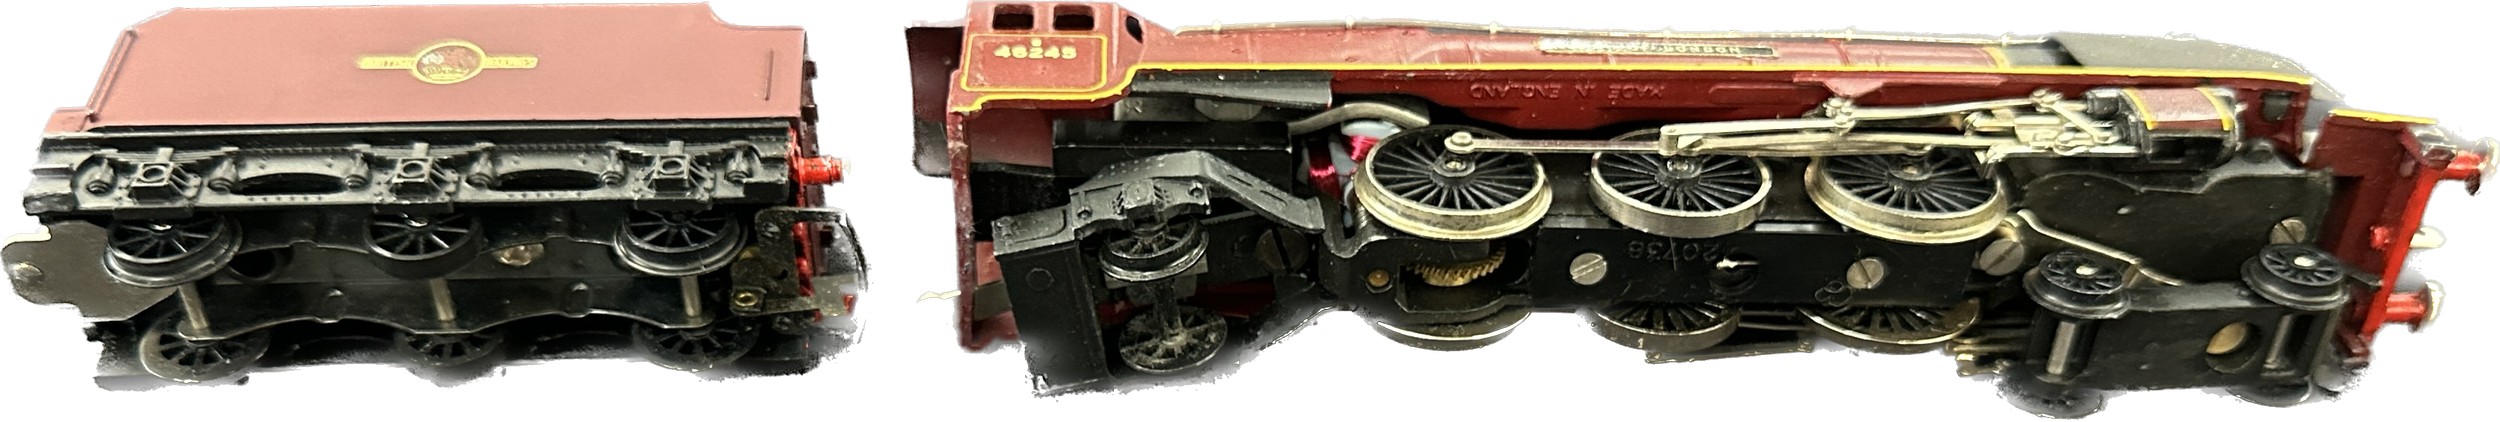 Wrenn Model Railways W2226 LMS City of London boxed loco body & tender - Image 2 of 3